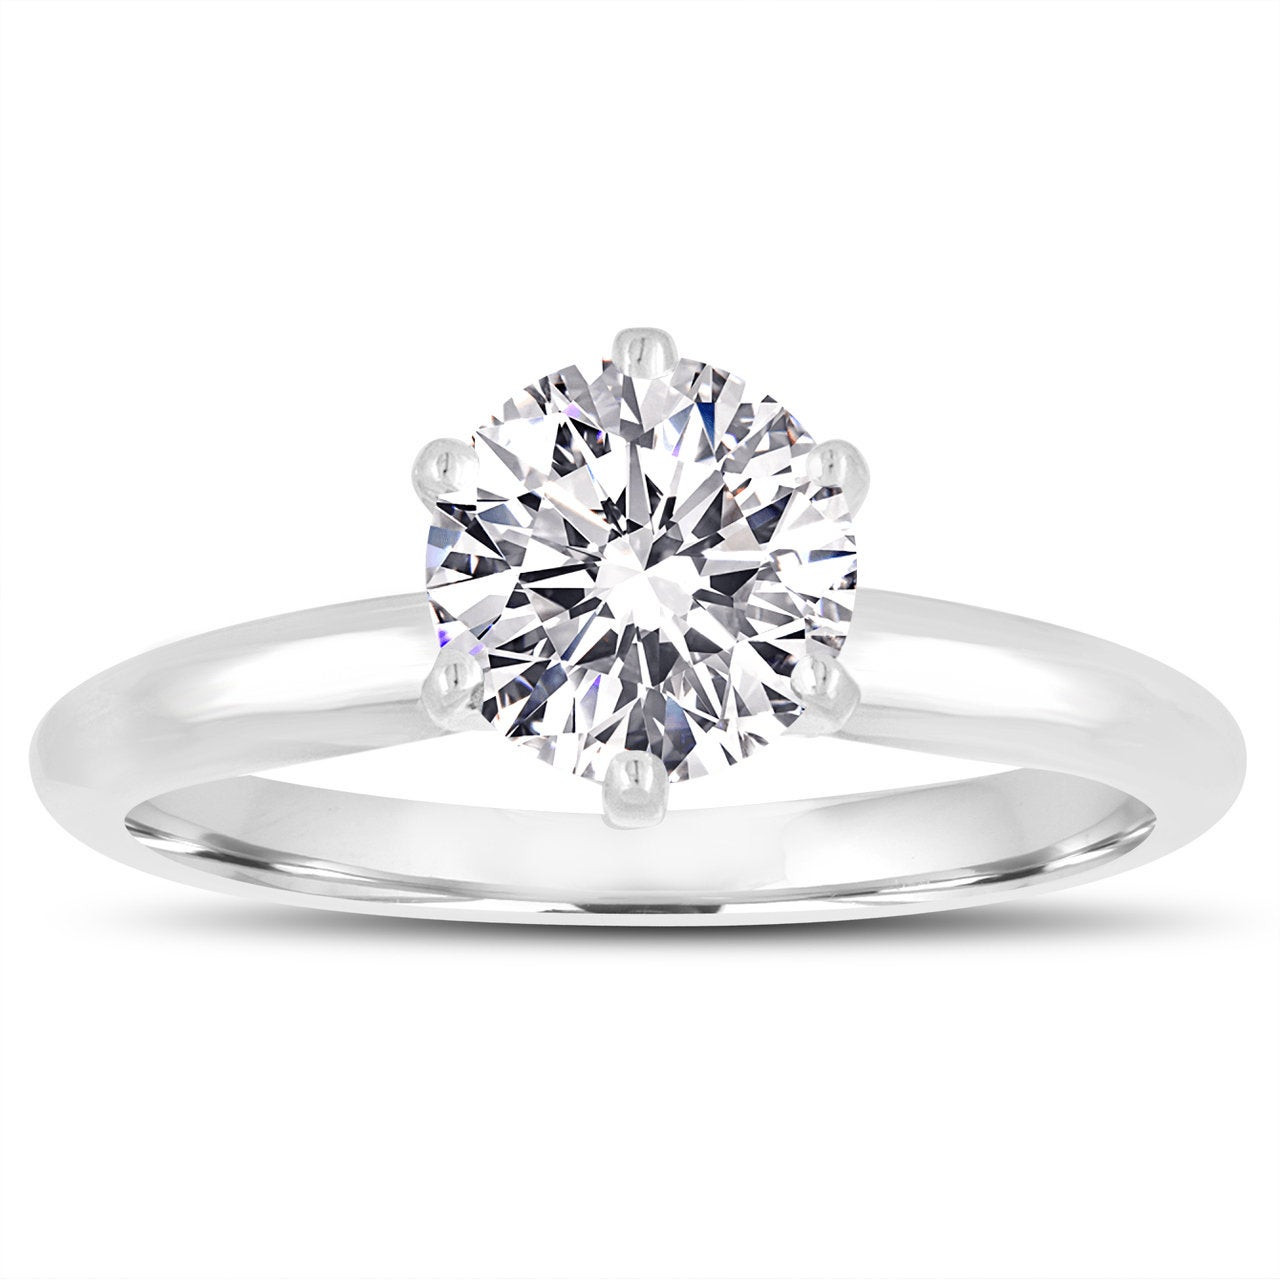 Buy Serenity Solitaire Lab Diamond Ring At Best Price| Karuri Jewellers